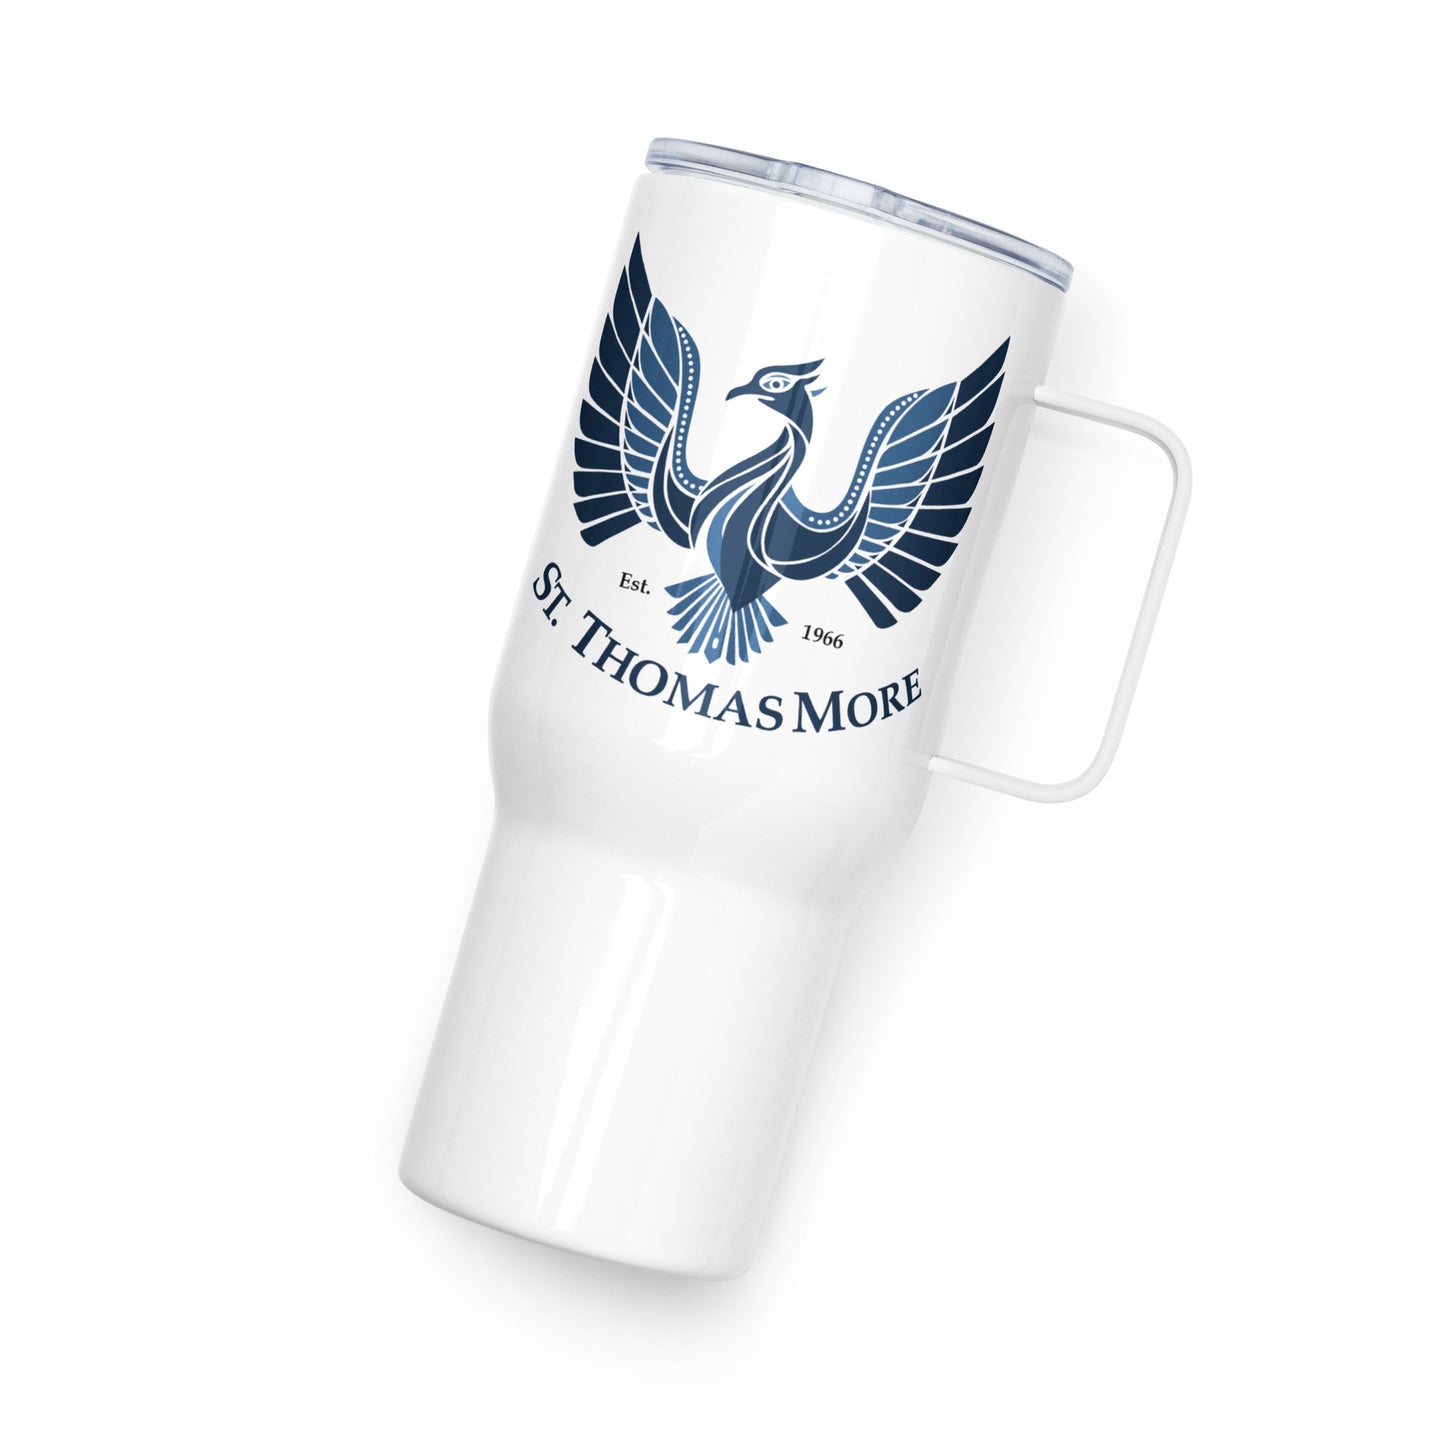 St. Thomas More Travel mug with a handle